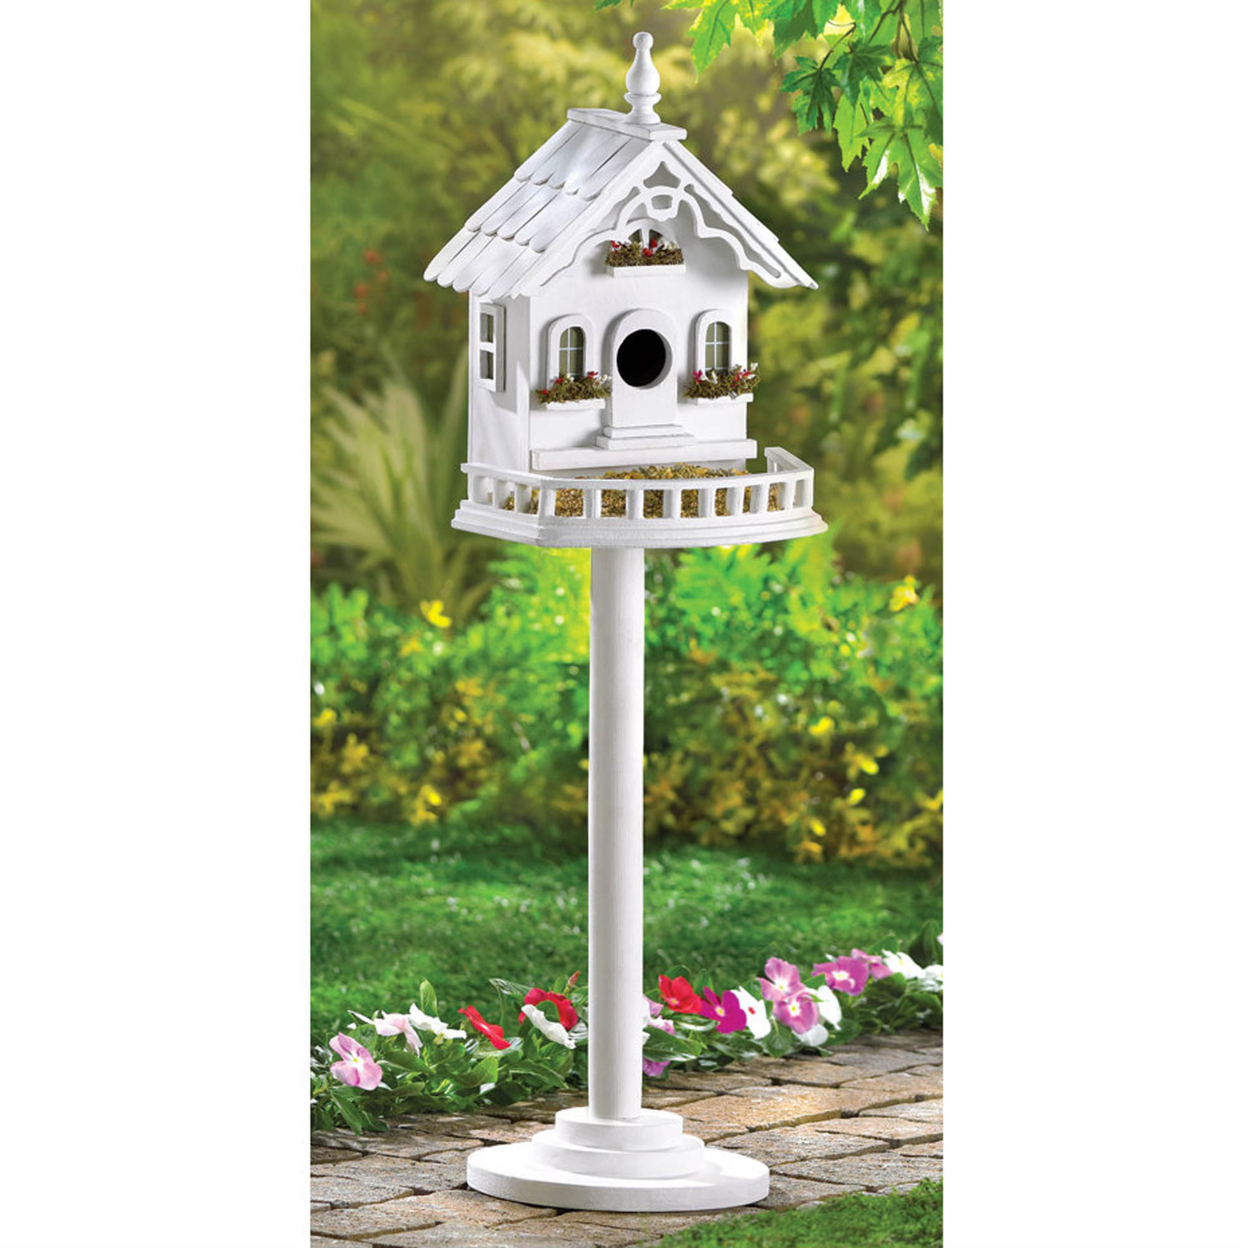 Home Decorative Victorian Pedestal Bird House - White - image 1 of 6